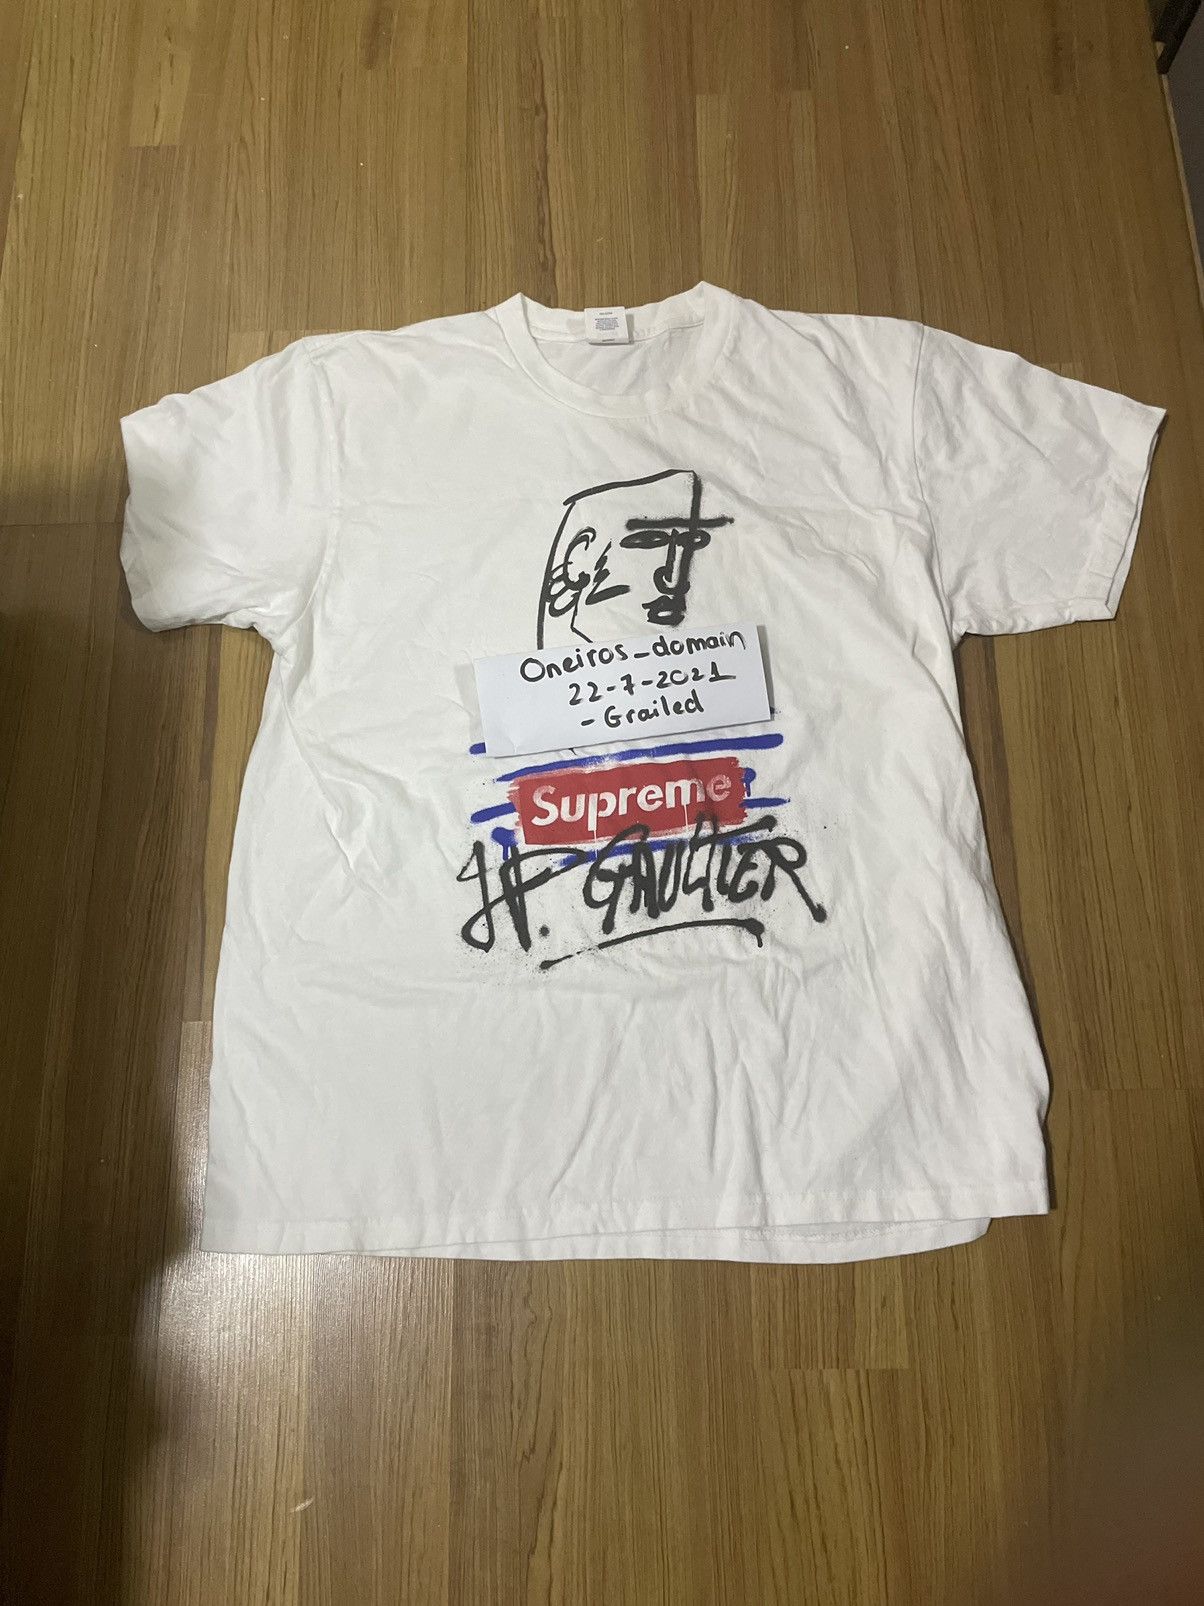 Supreme Supreme x Jean Paul Gaultier T-shirt | Grailed